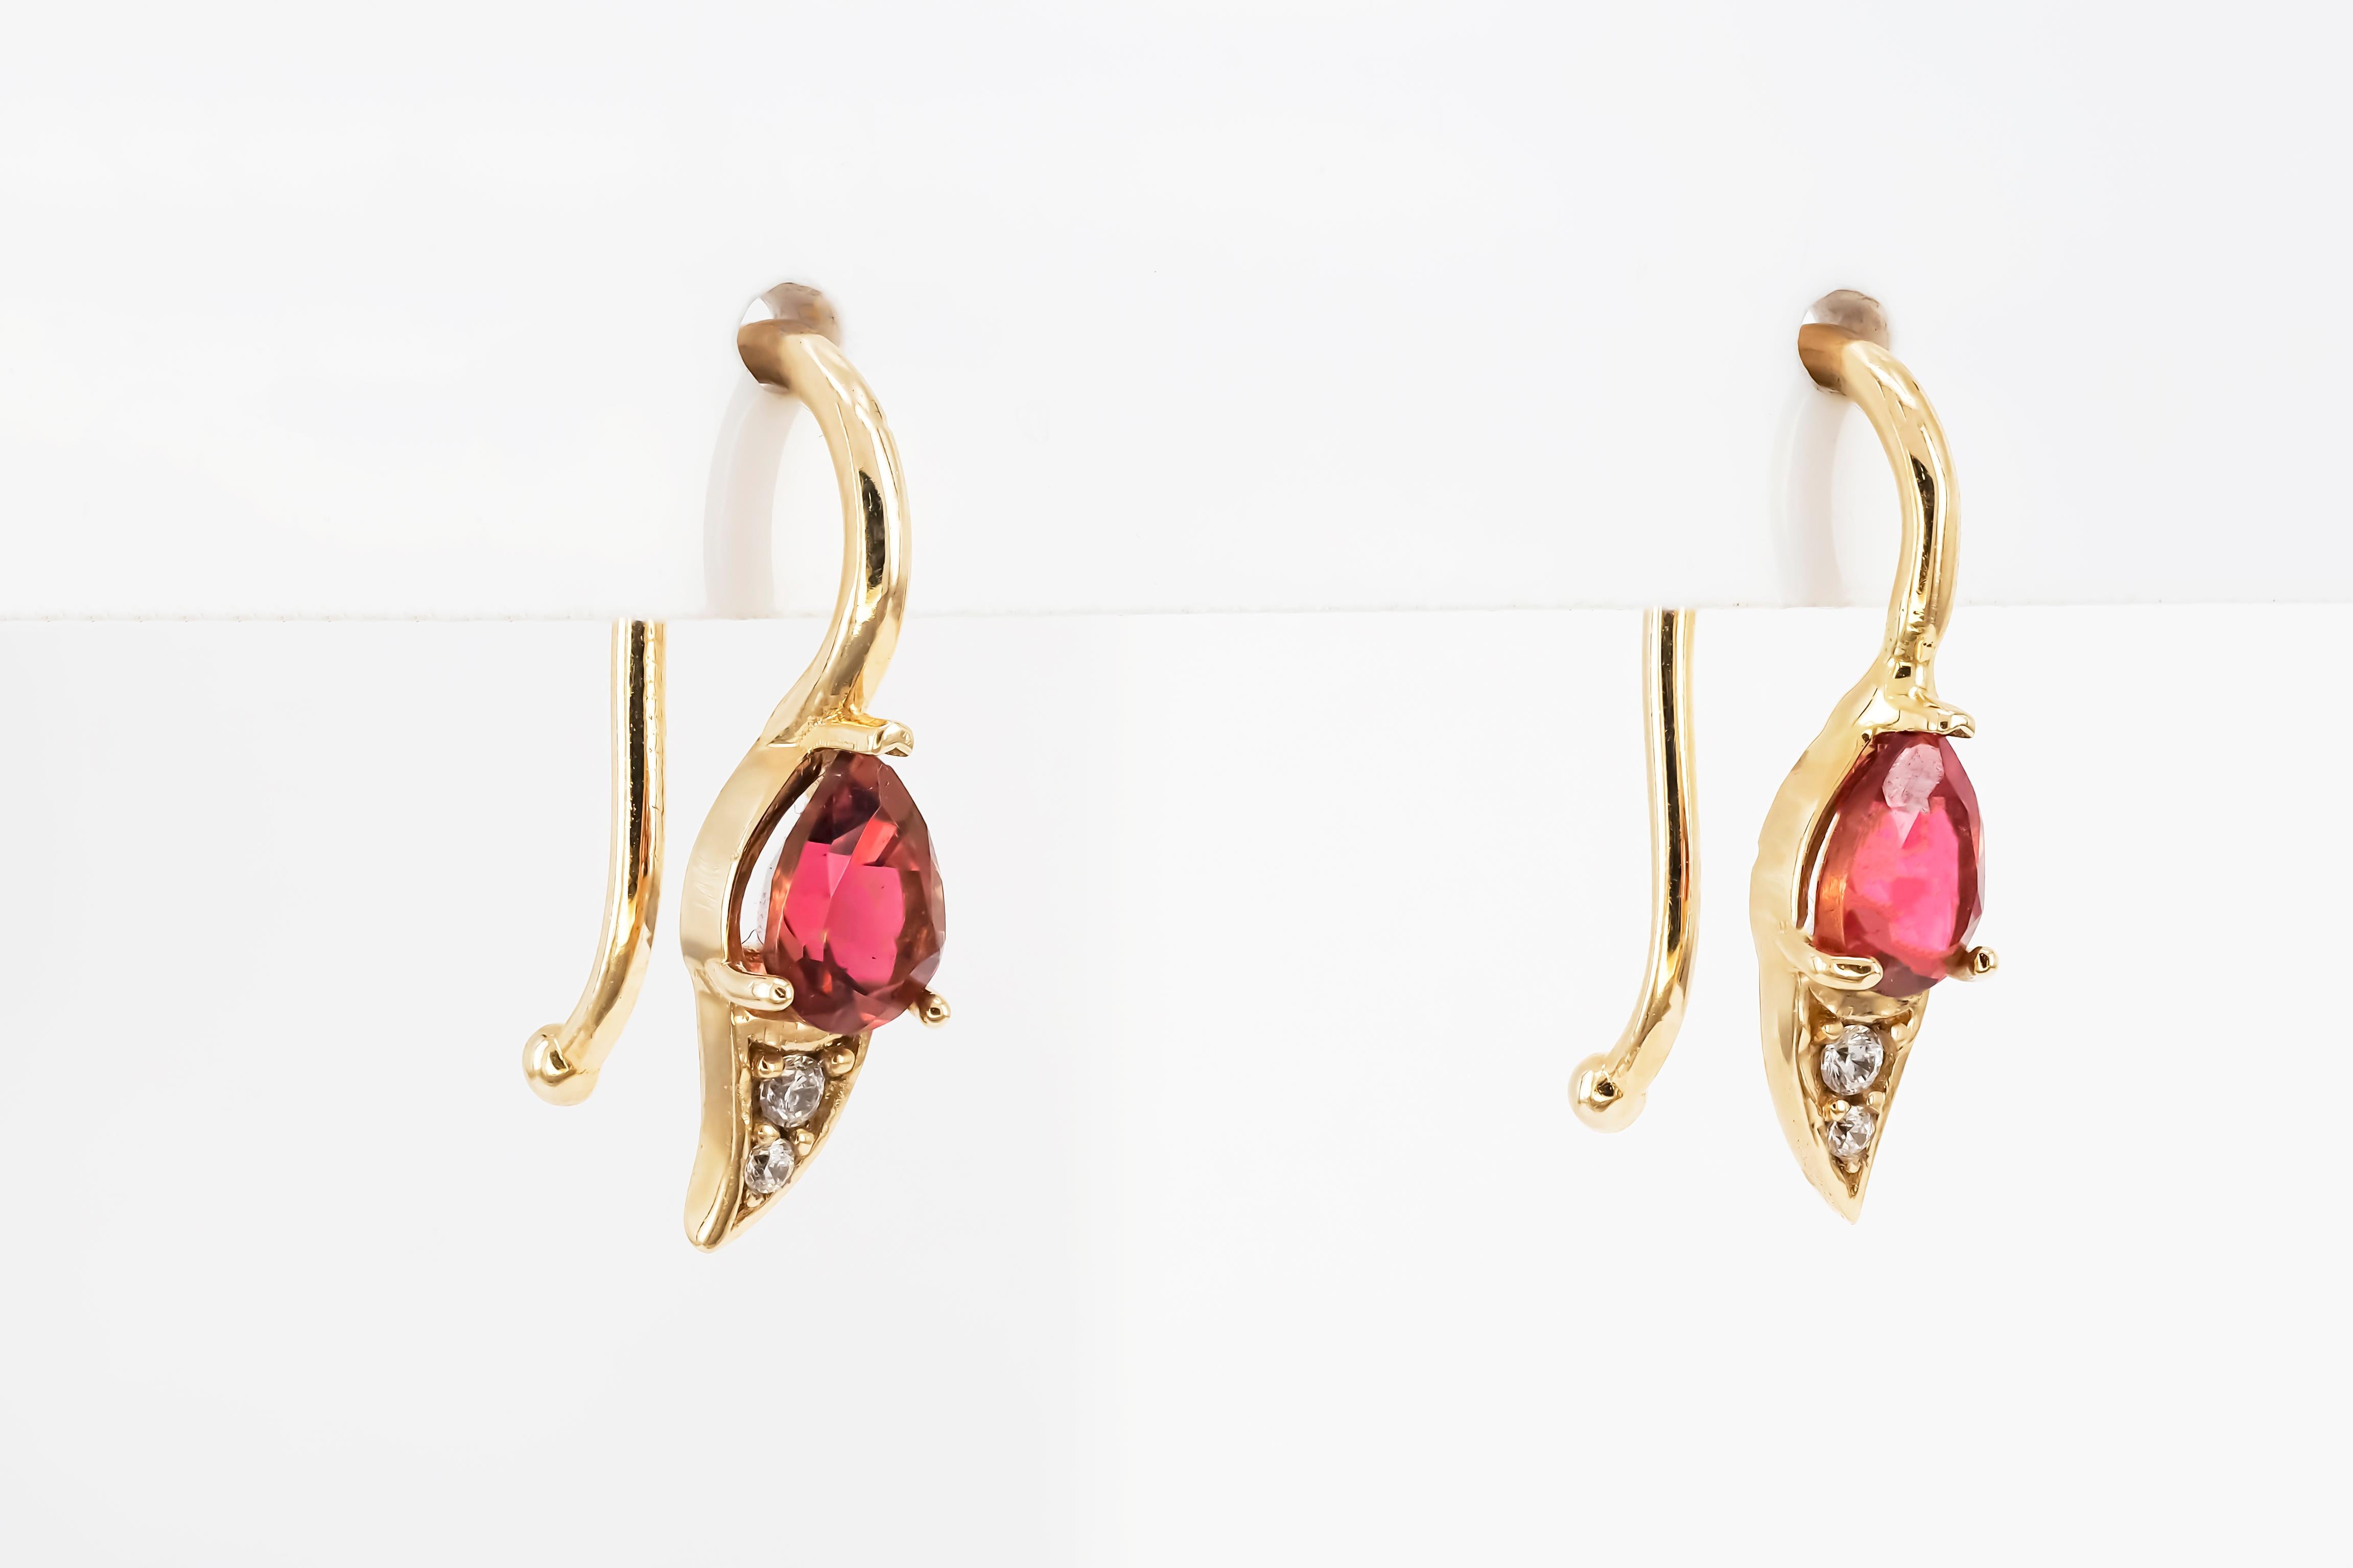 Pear Cut Pink Tourmaline Earrings in 14k Yellow Gold